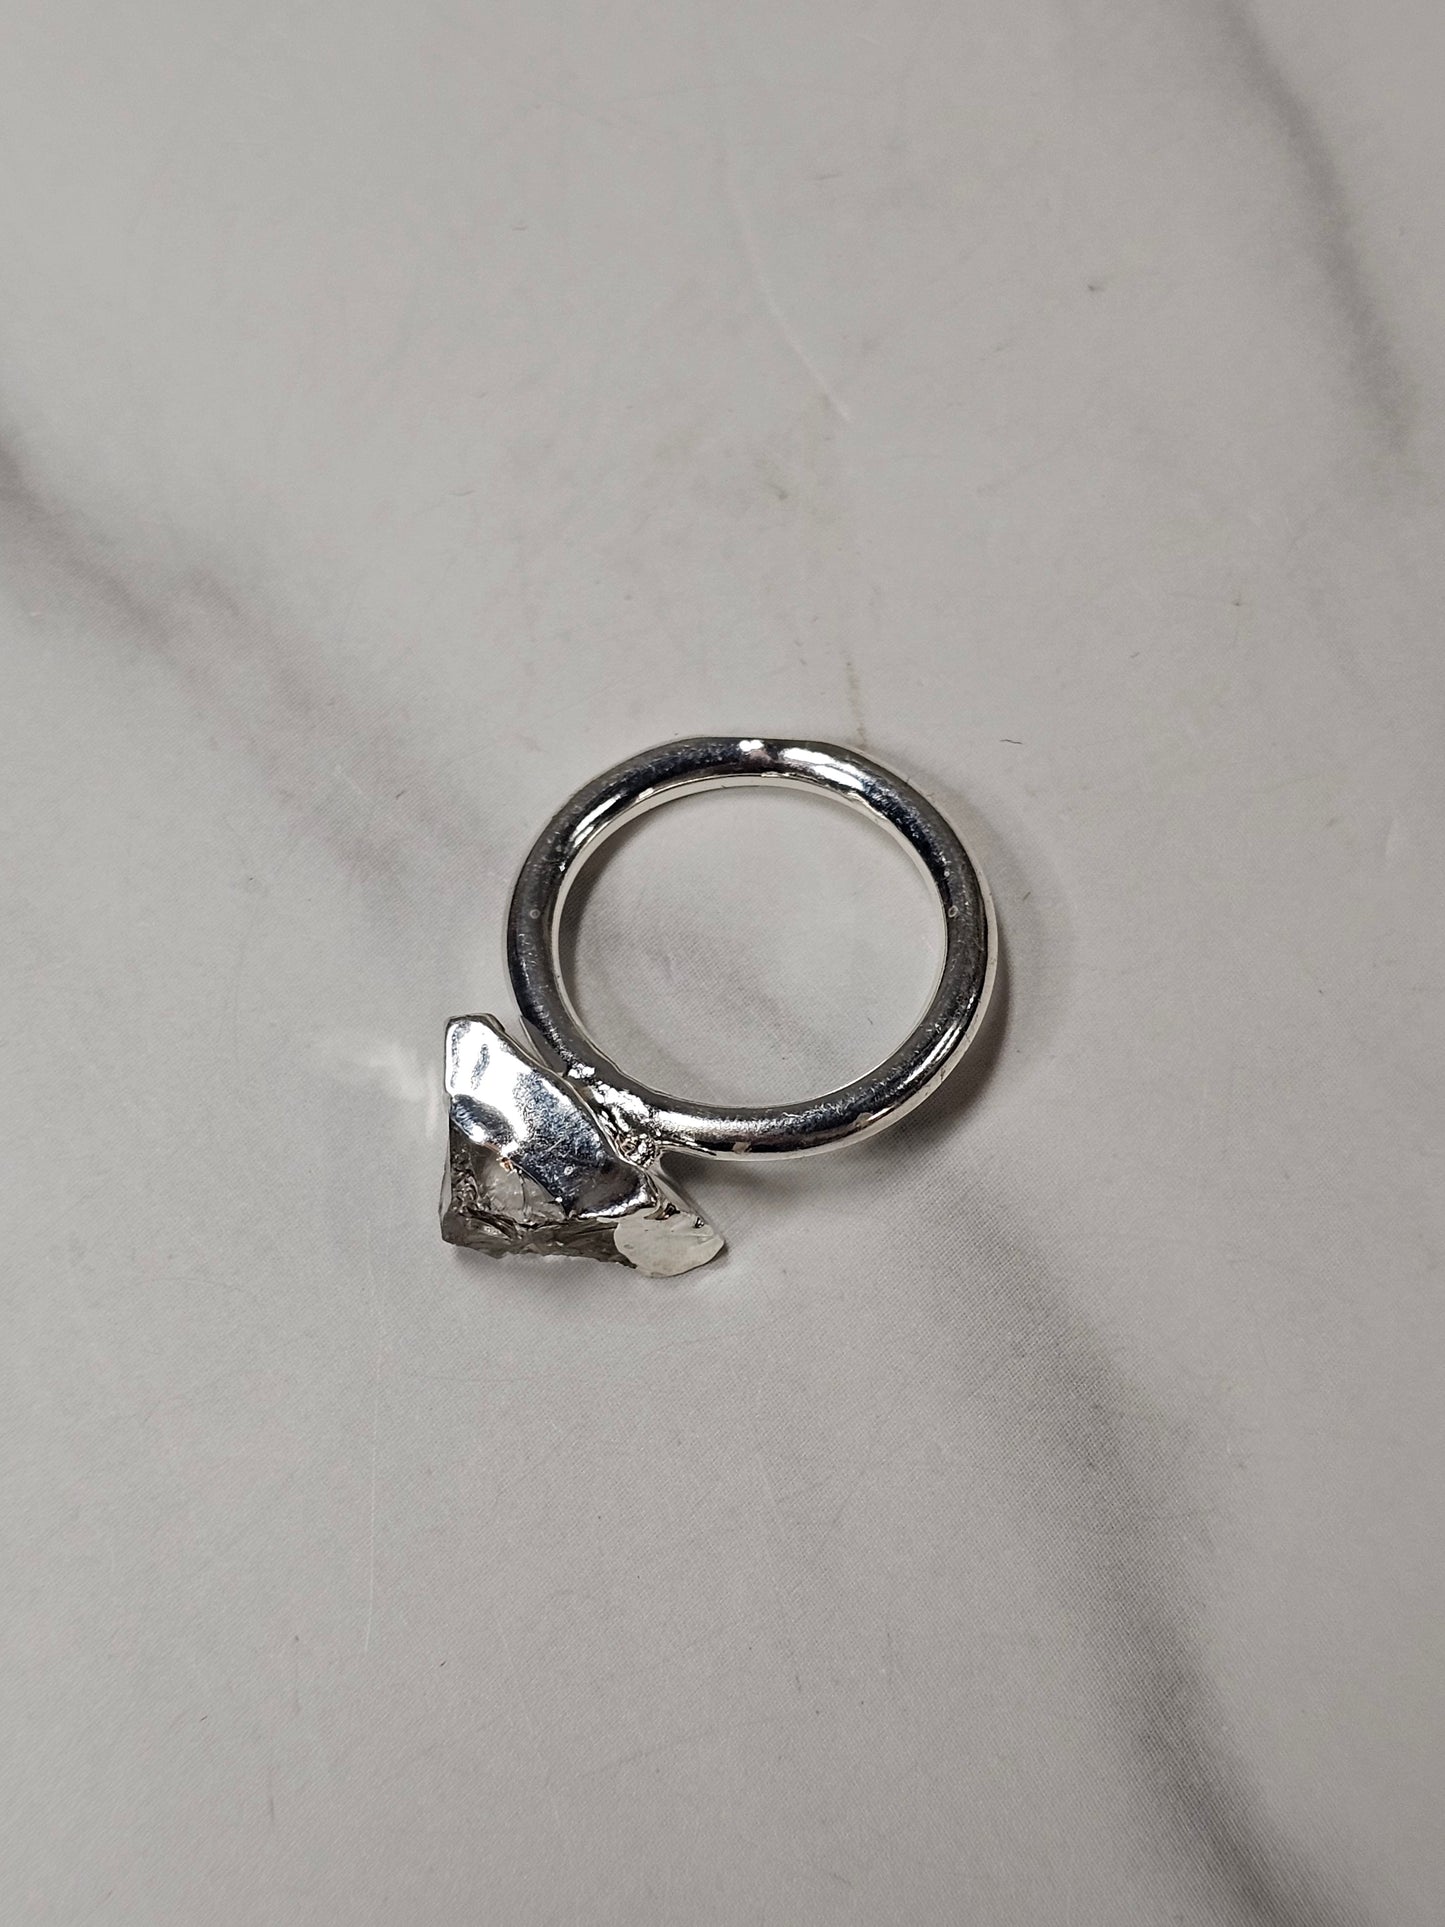 Rough Smokey Quartz Silver Plated Ring Size 7.25